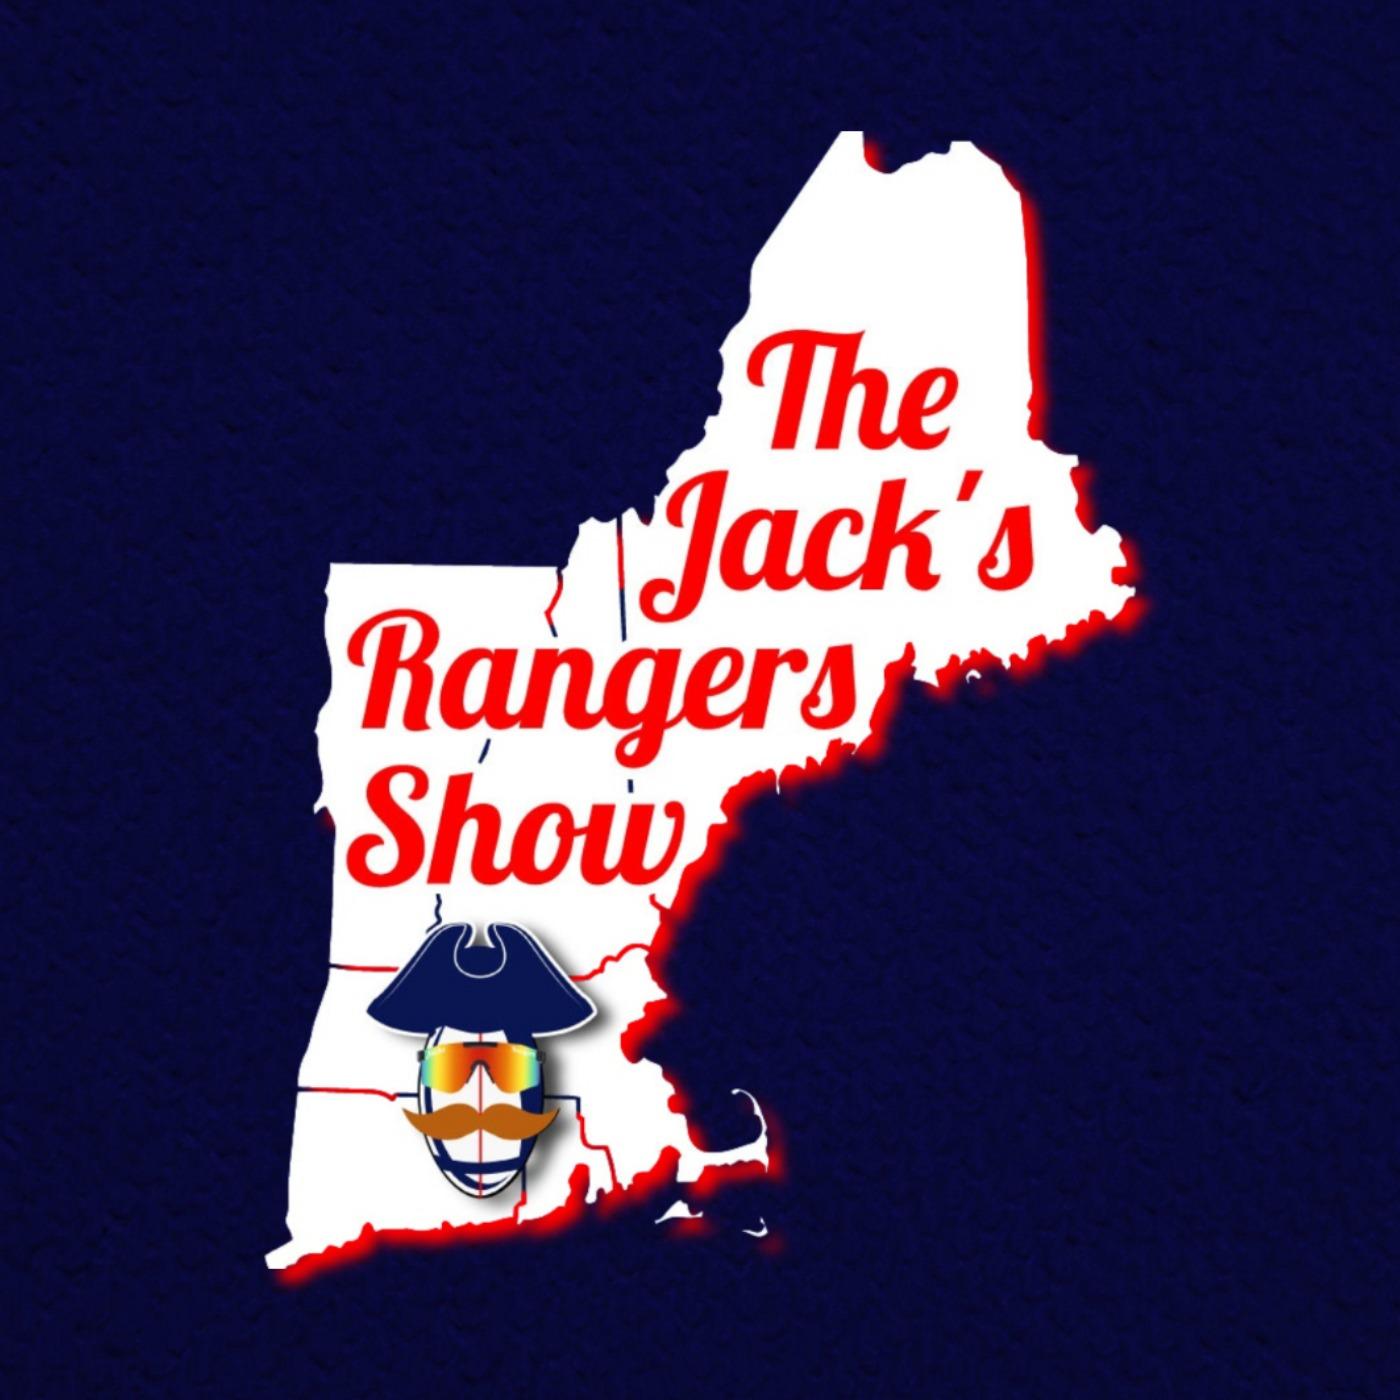 The Jack's Rangers Show